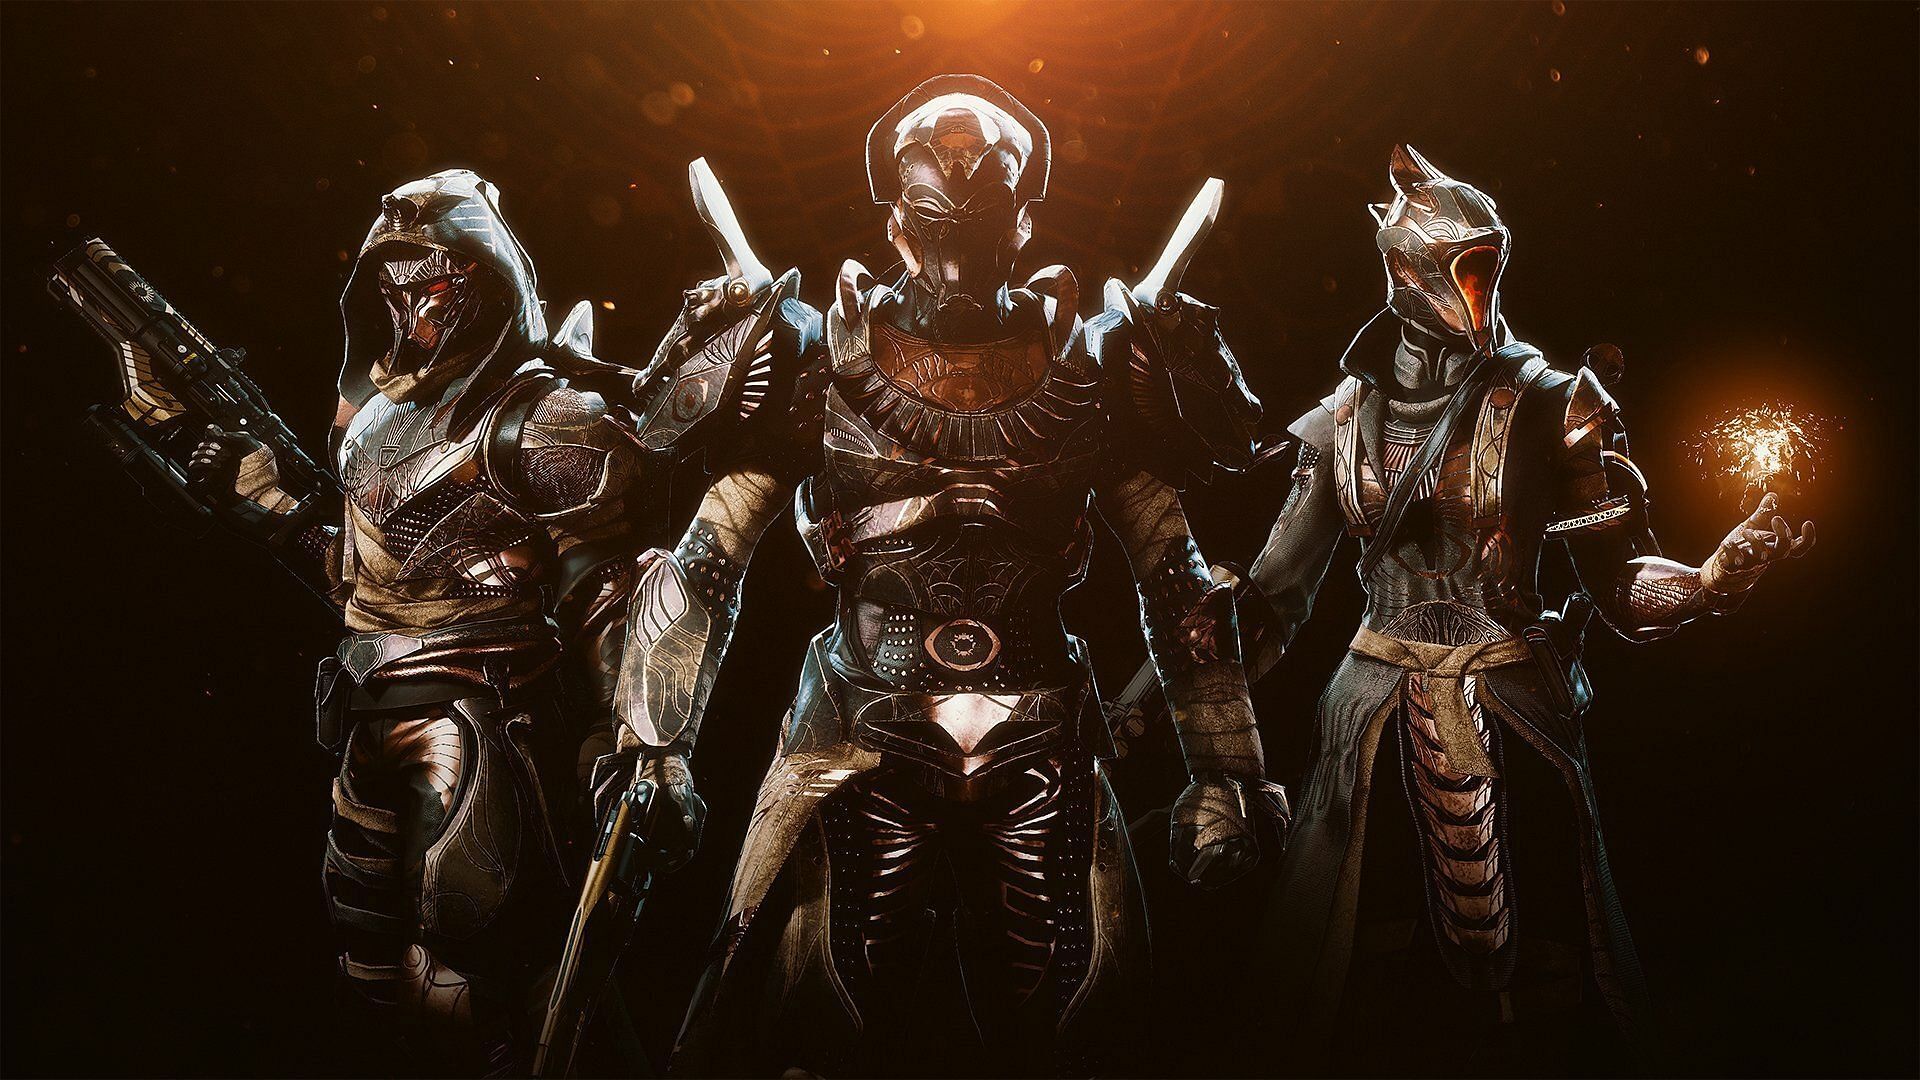 Trials of Osiris armor for all classes in Destiny 2 (Image via Bungie)